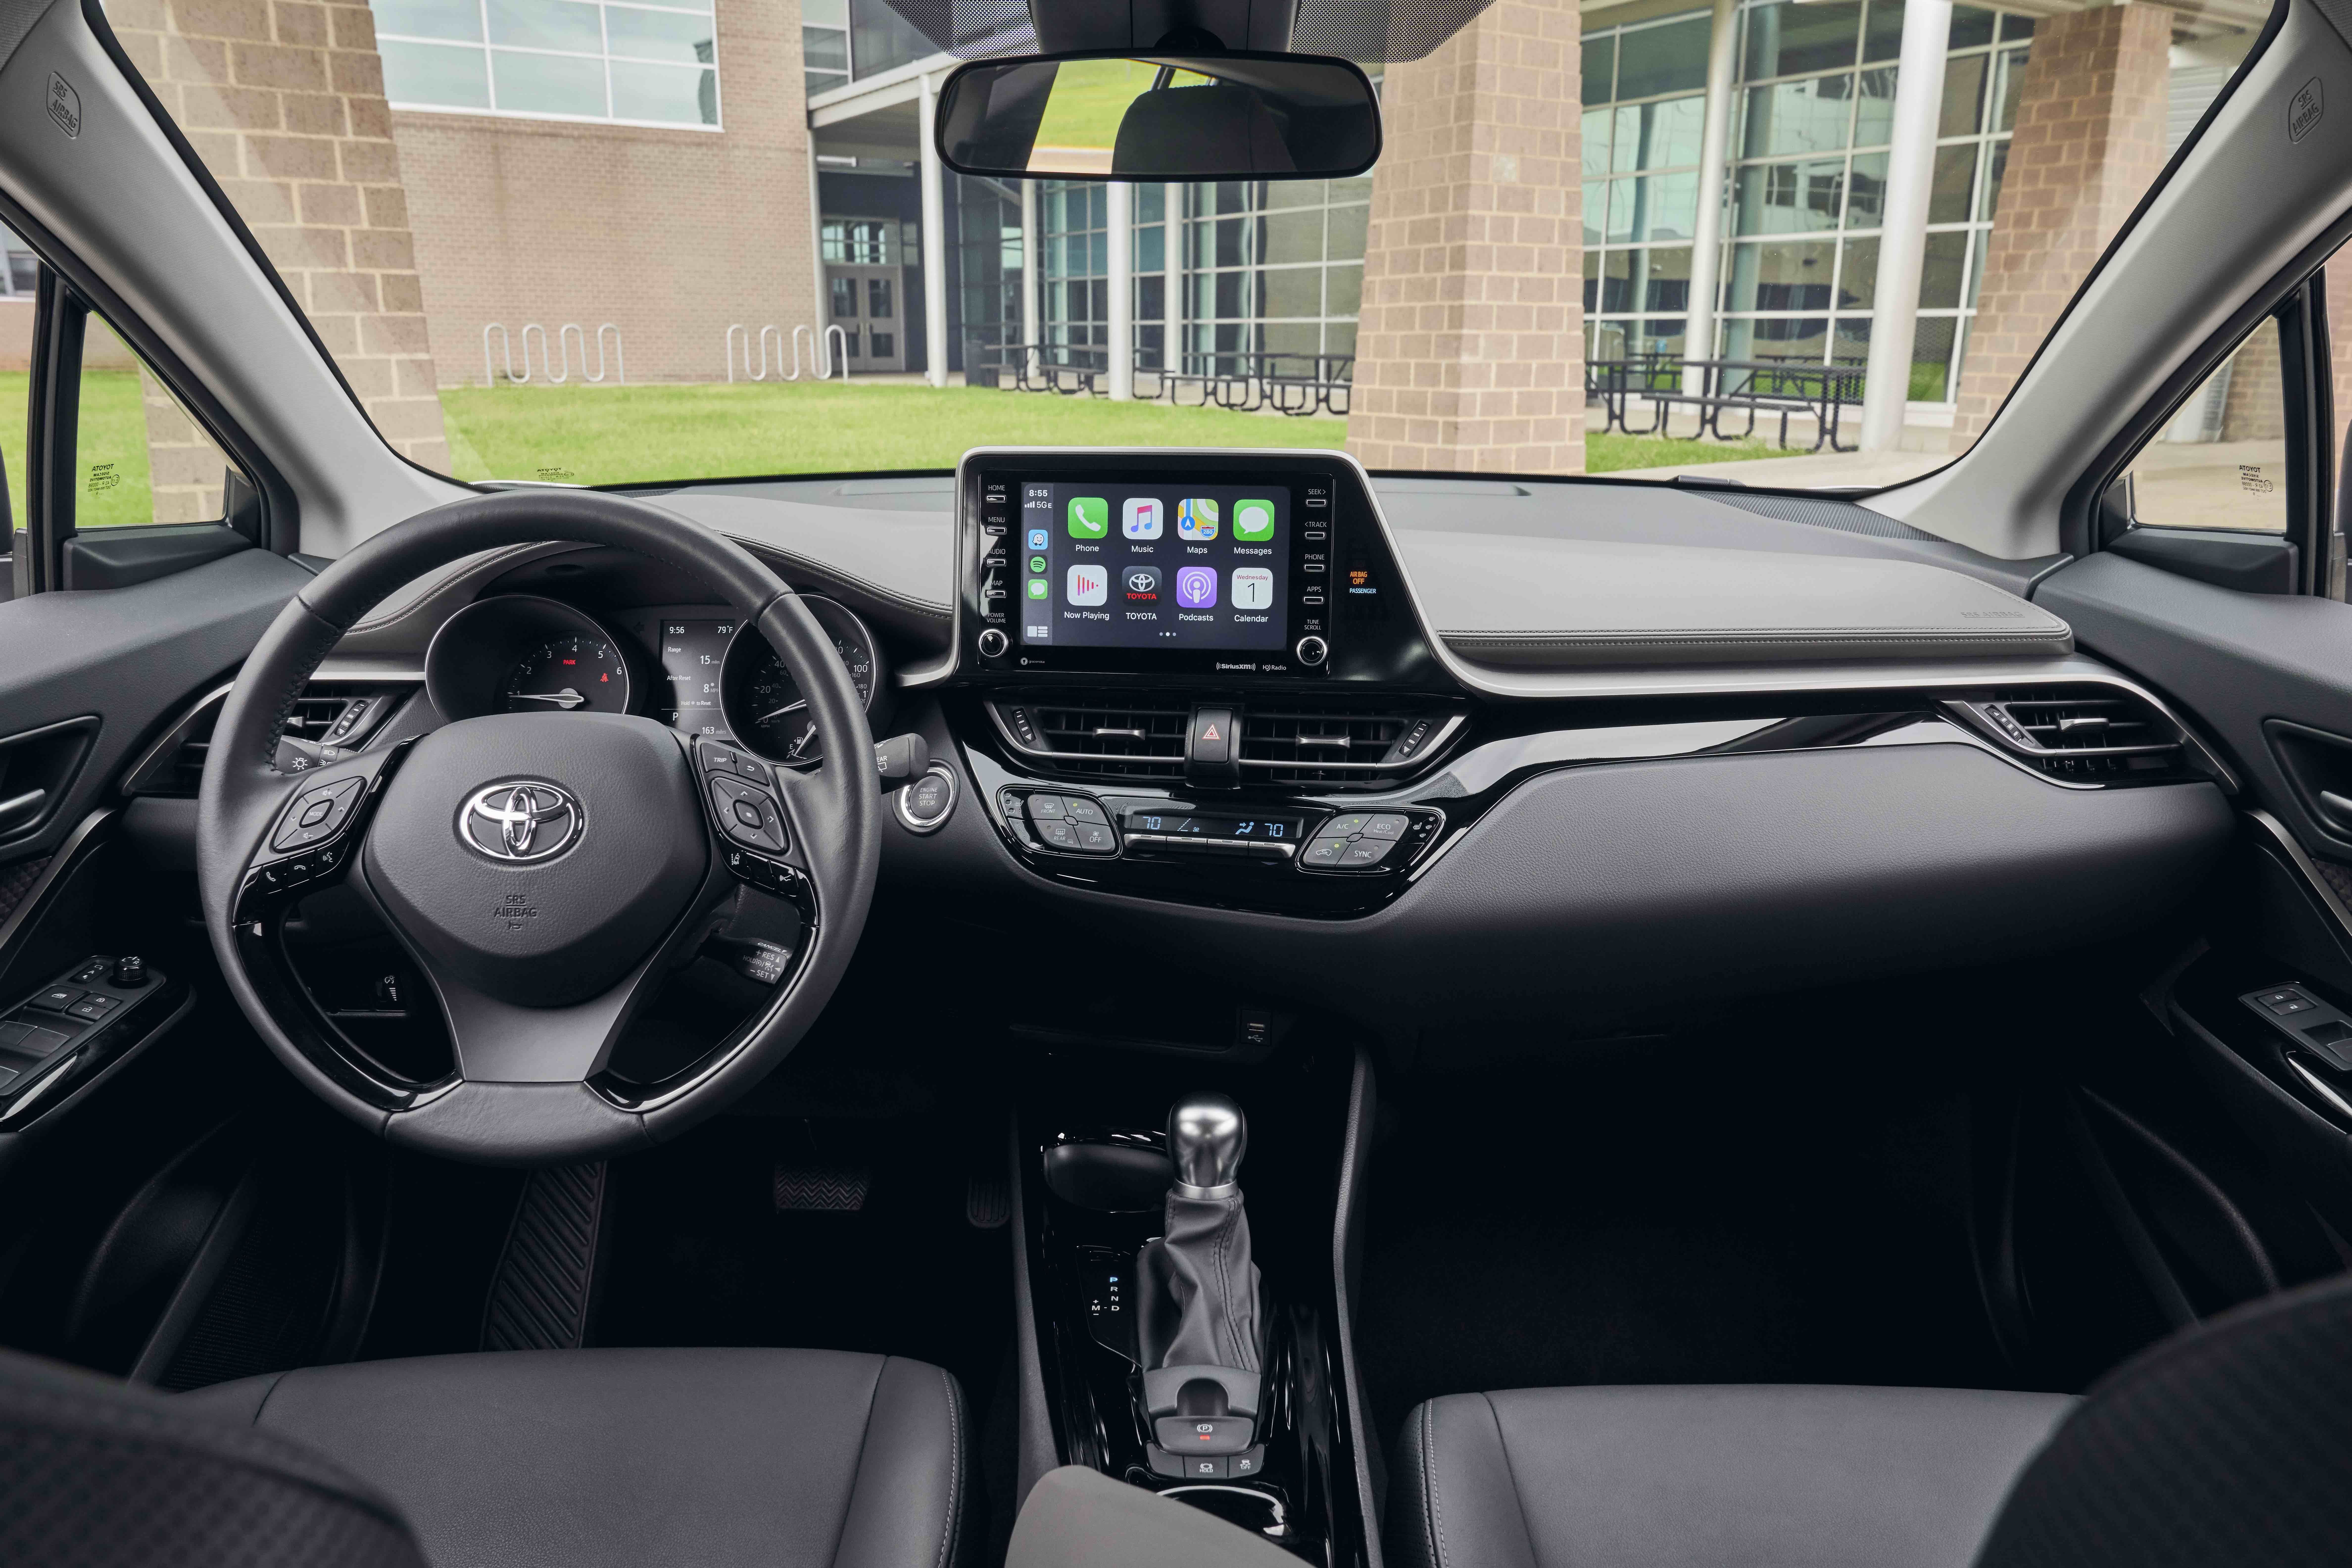 Interior design and technology – Toyota C-HR - Just Auto